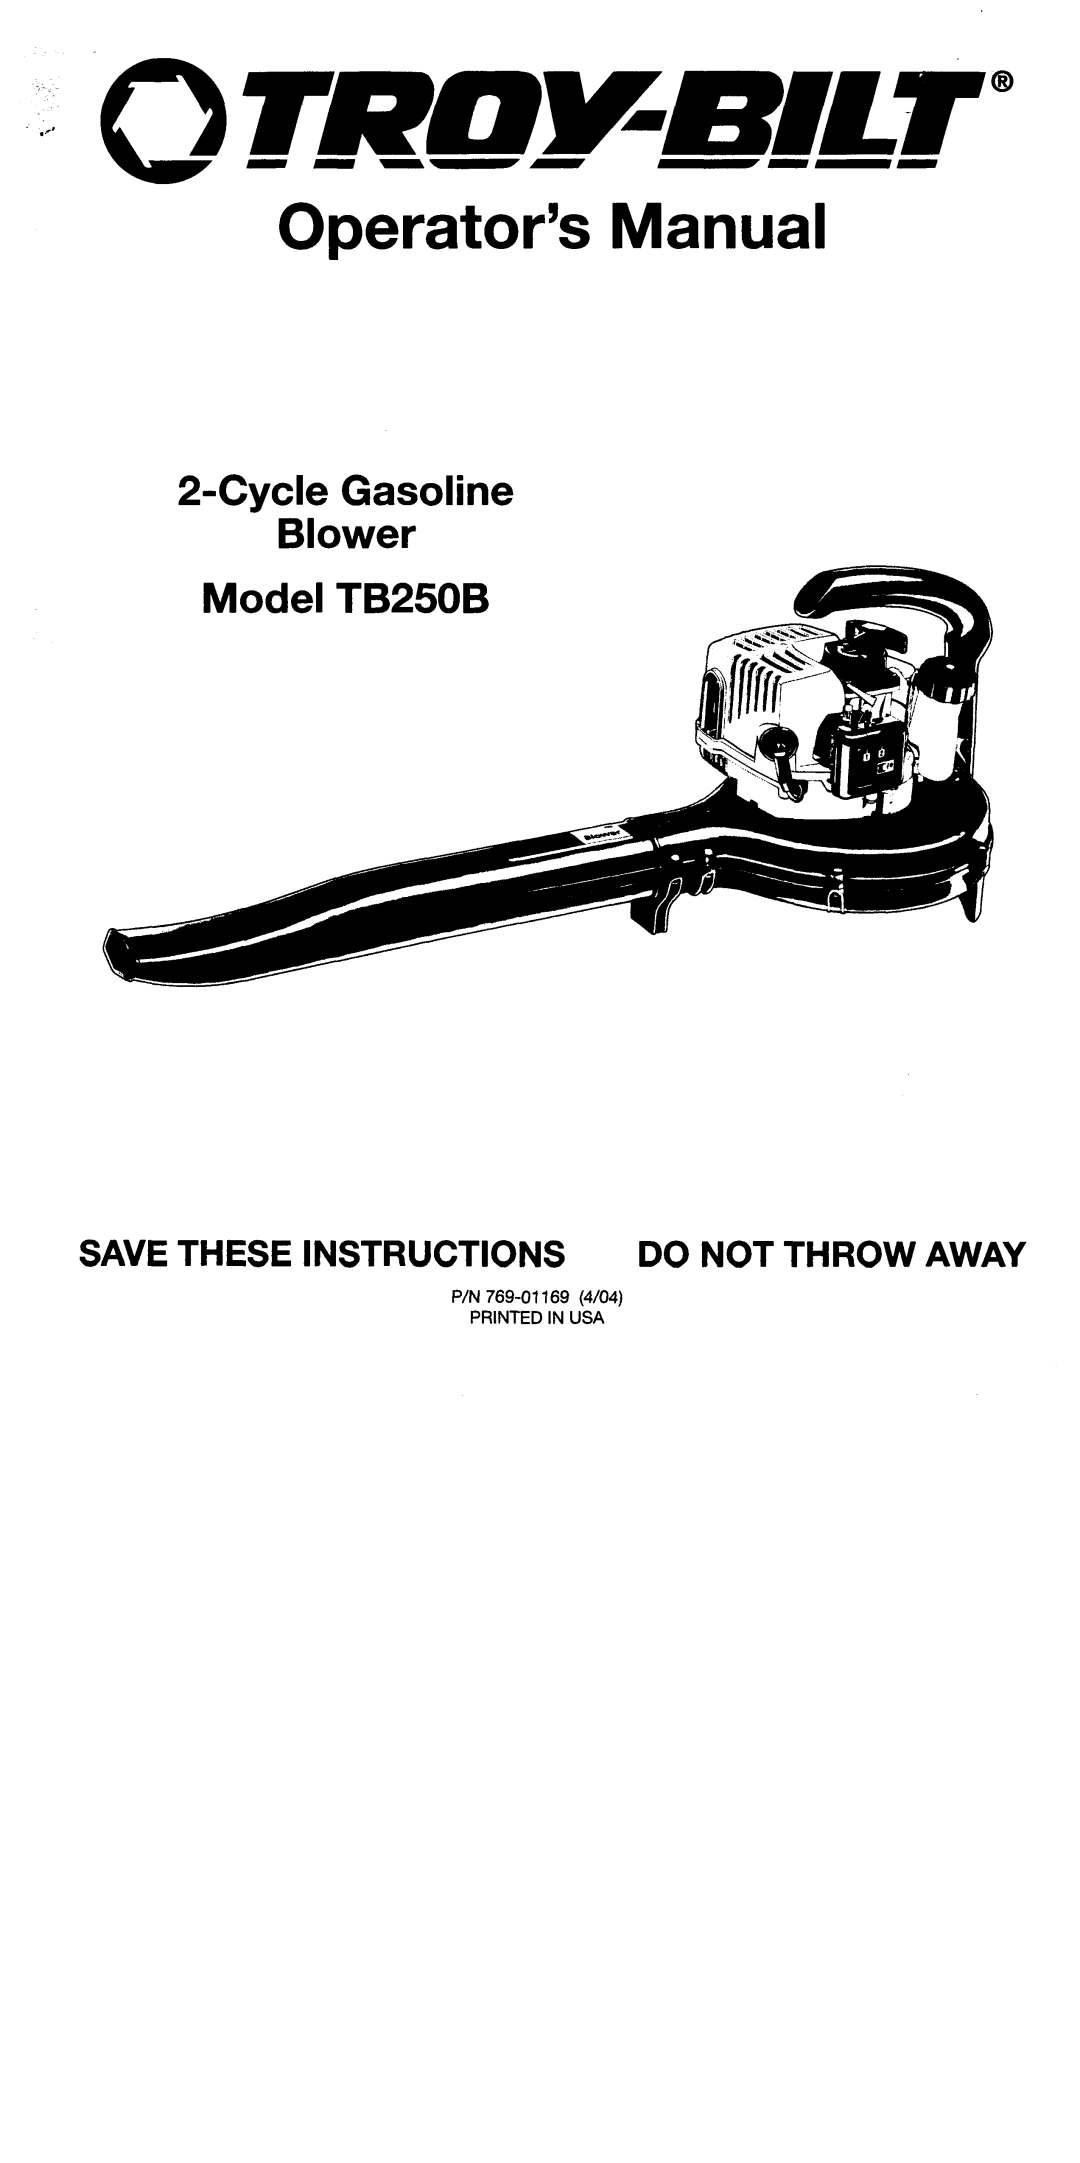 Troy-Bilt TB250B manual 